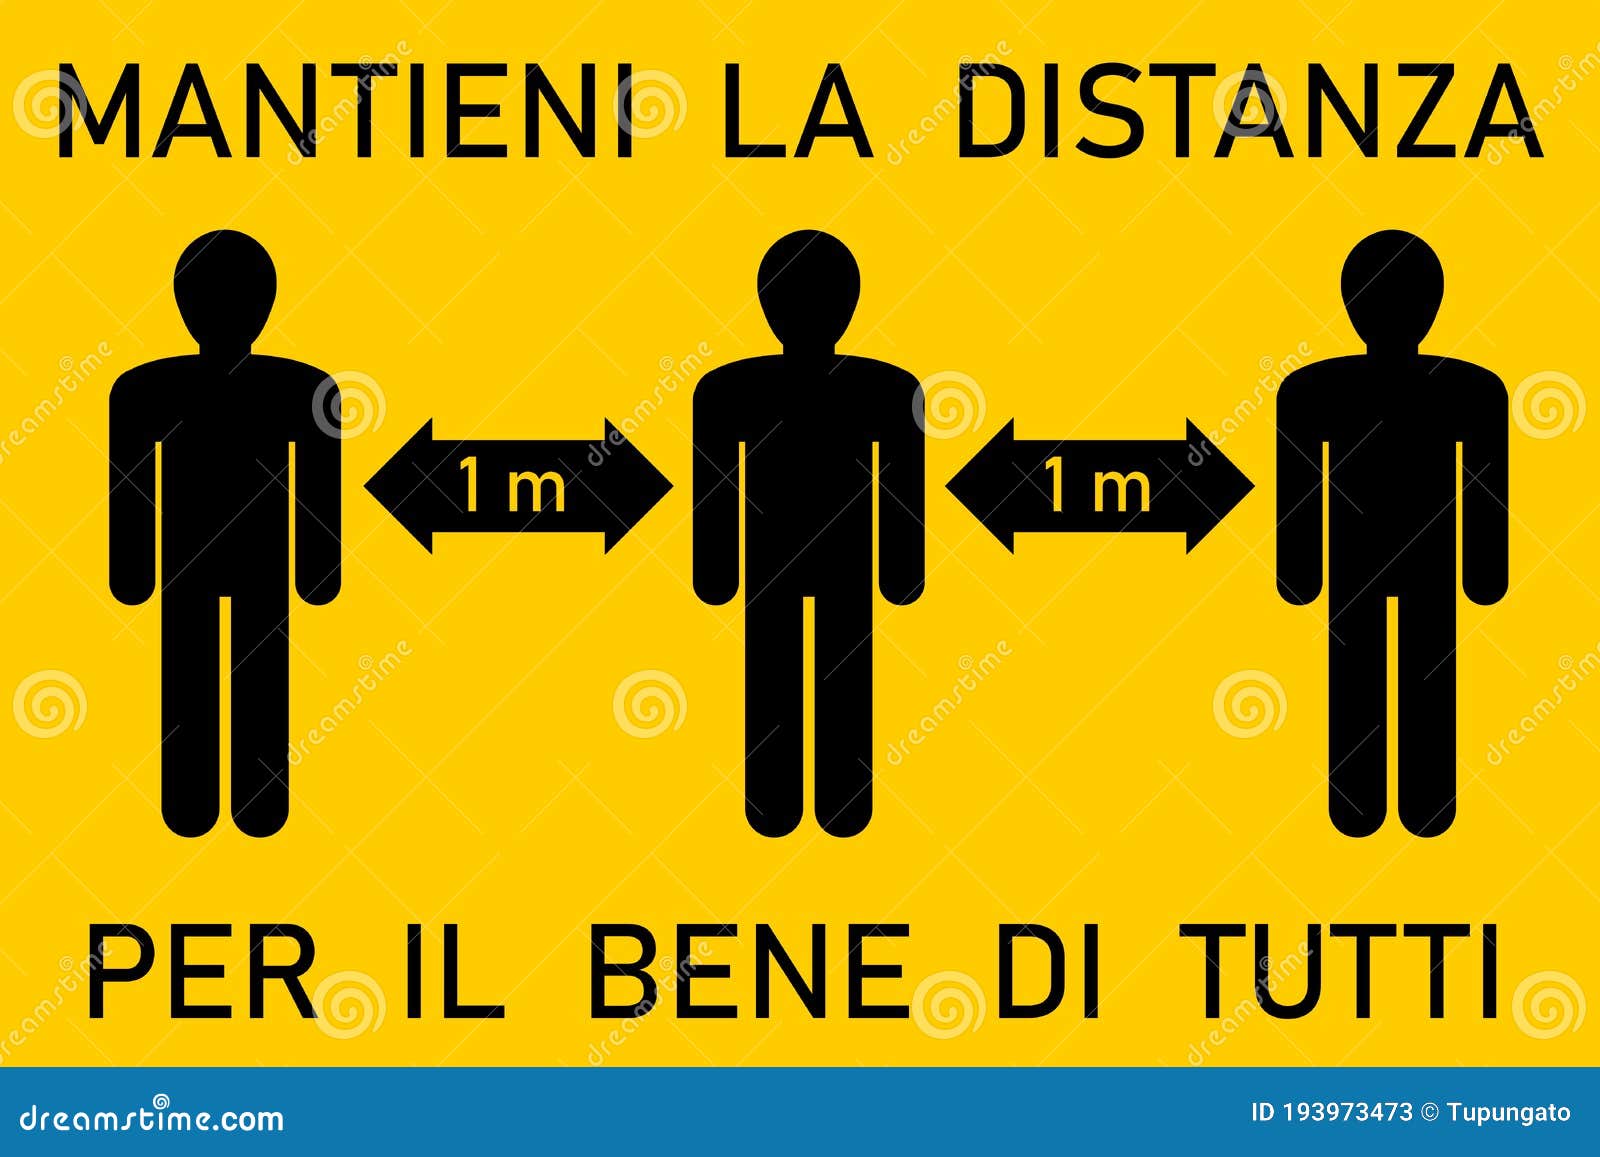 mantieni la distanza - italian language